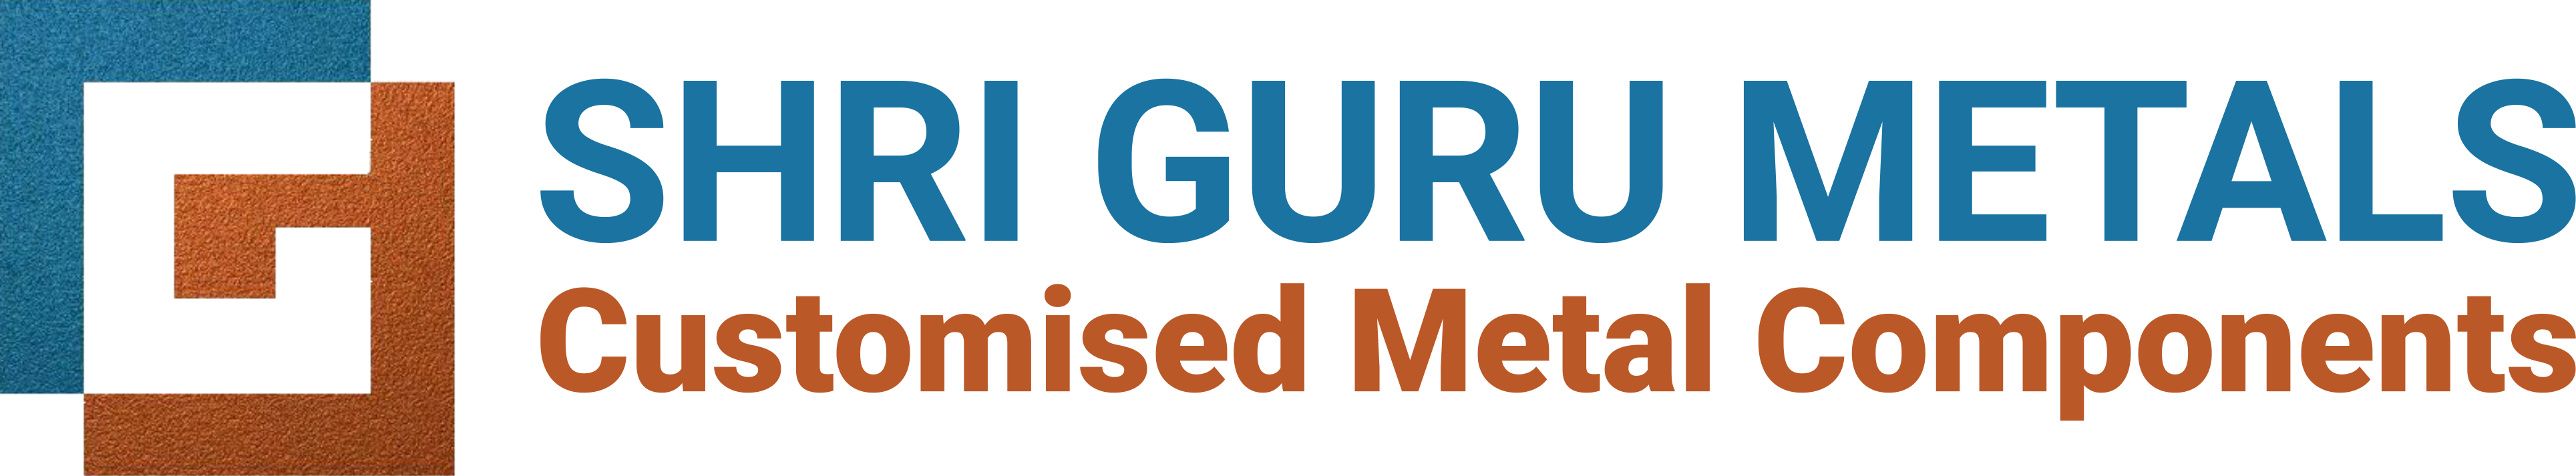 Shri_Guru_Metal_Logo_c2c[1]